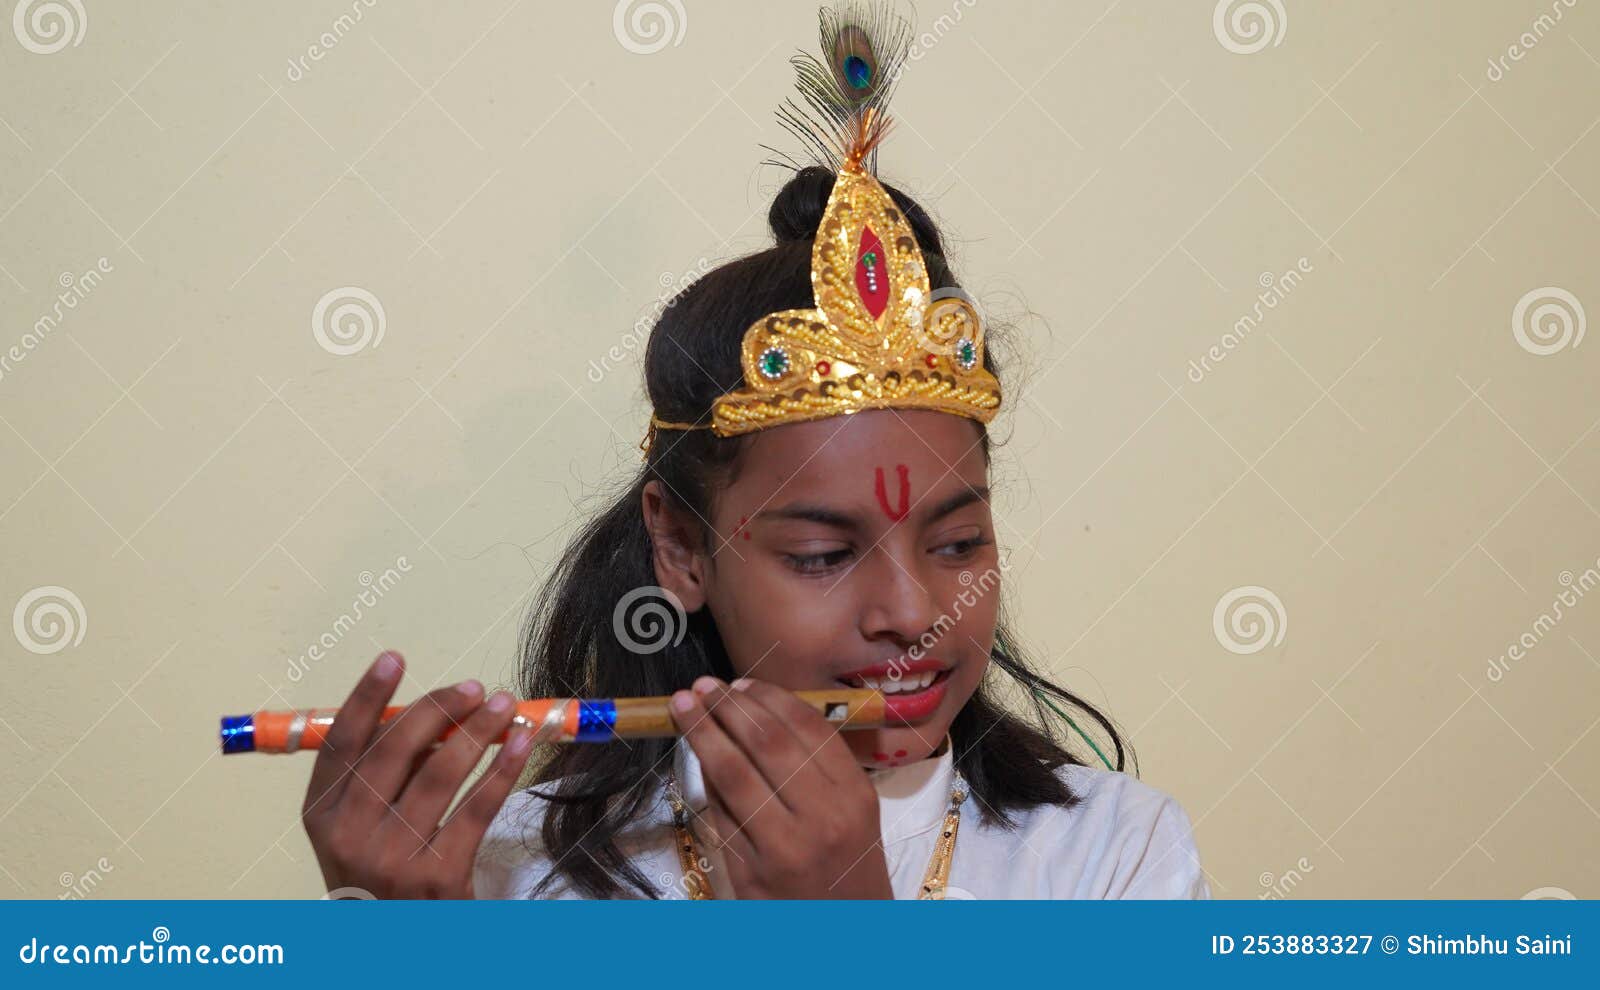 Child Dressed As Lord Sri Krishna on the Janmashtami Festival or ...